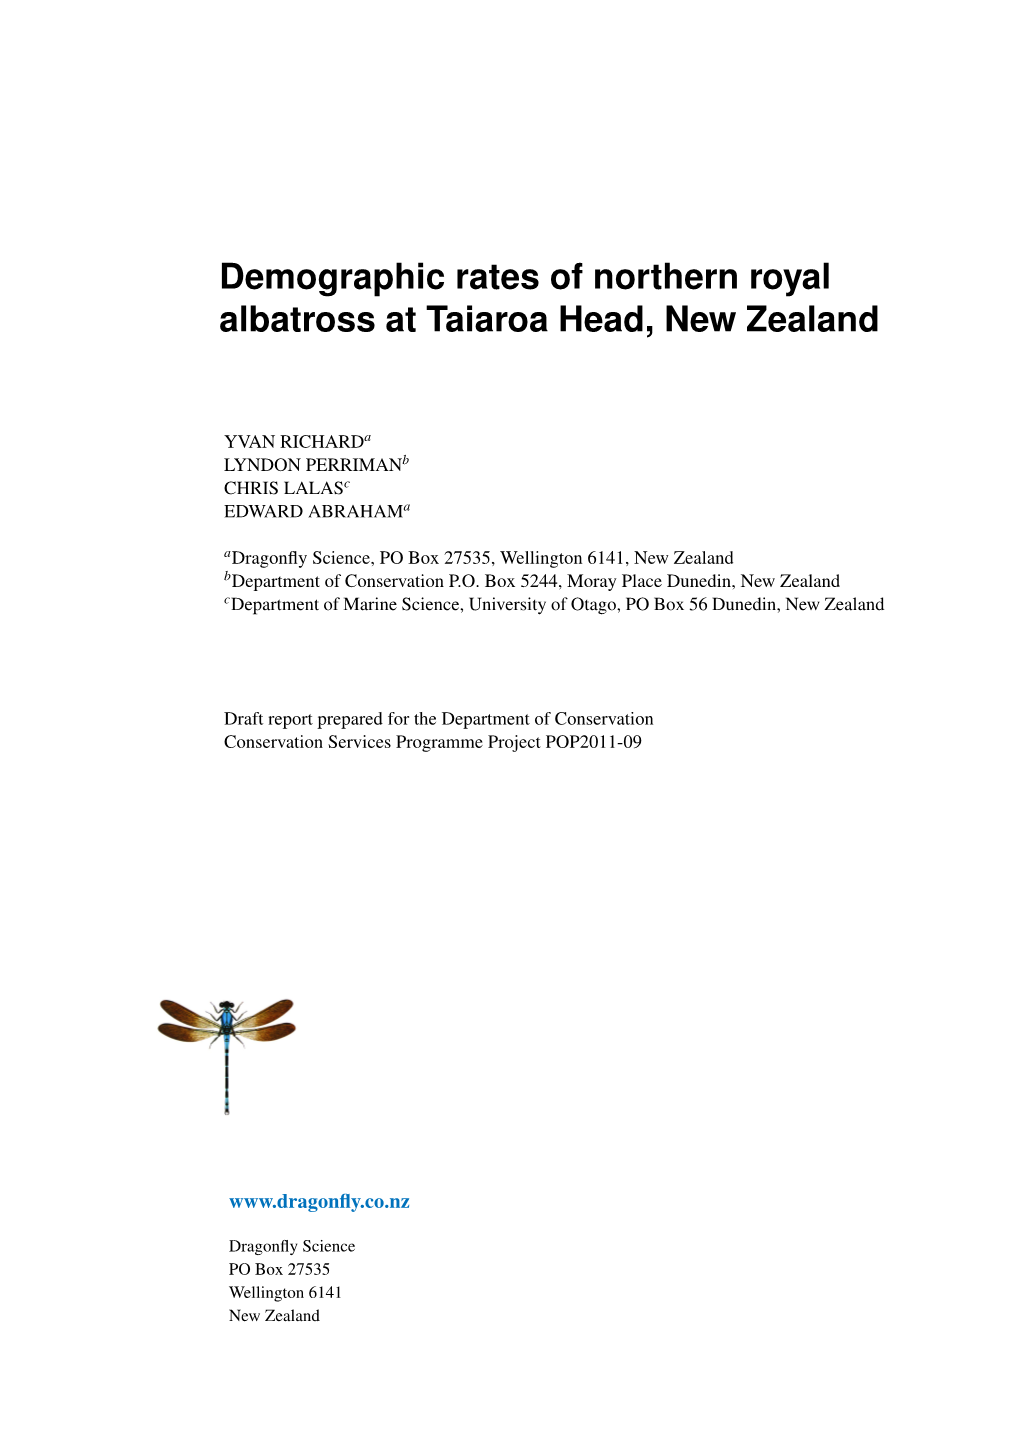 Demographic Rates of Northern Royal Albatross at Taiaroa Head, New Zealand